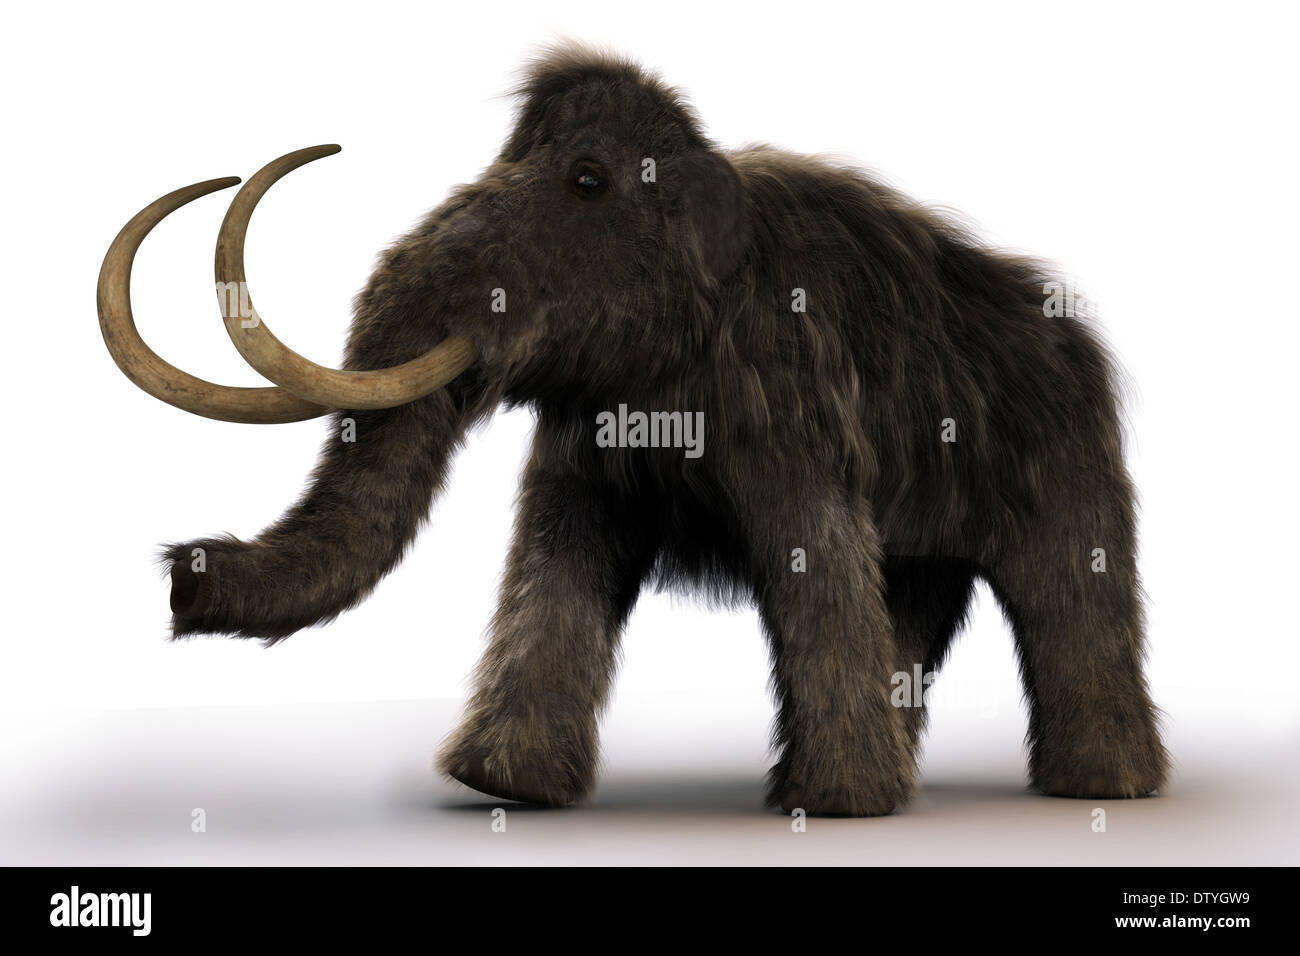 Вымерший гигант 9 букв сканворд. Mammuthus Woolly Mammoth. Шерстистый мамонт (Mammuthus primigenius). Мамонт в профиль. Кудрявый мамонт.